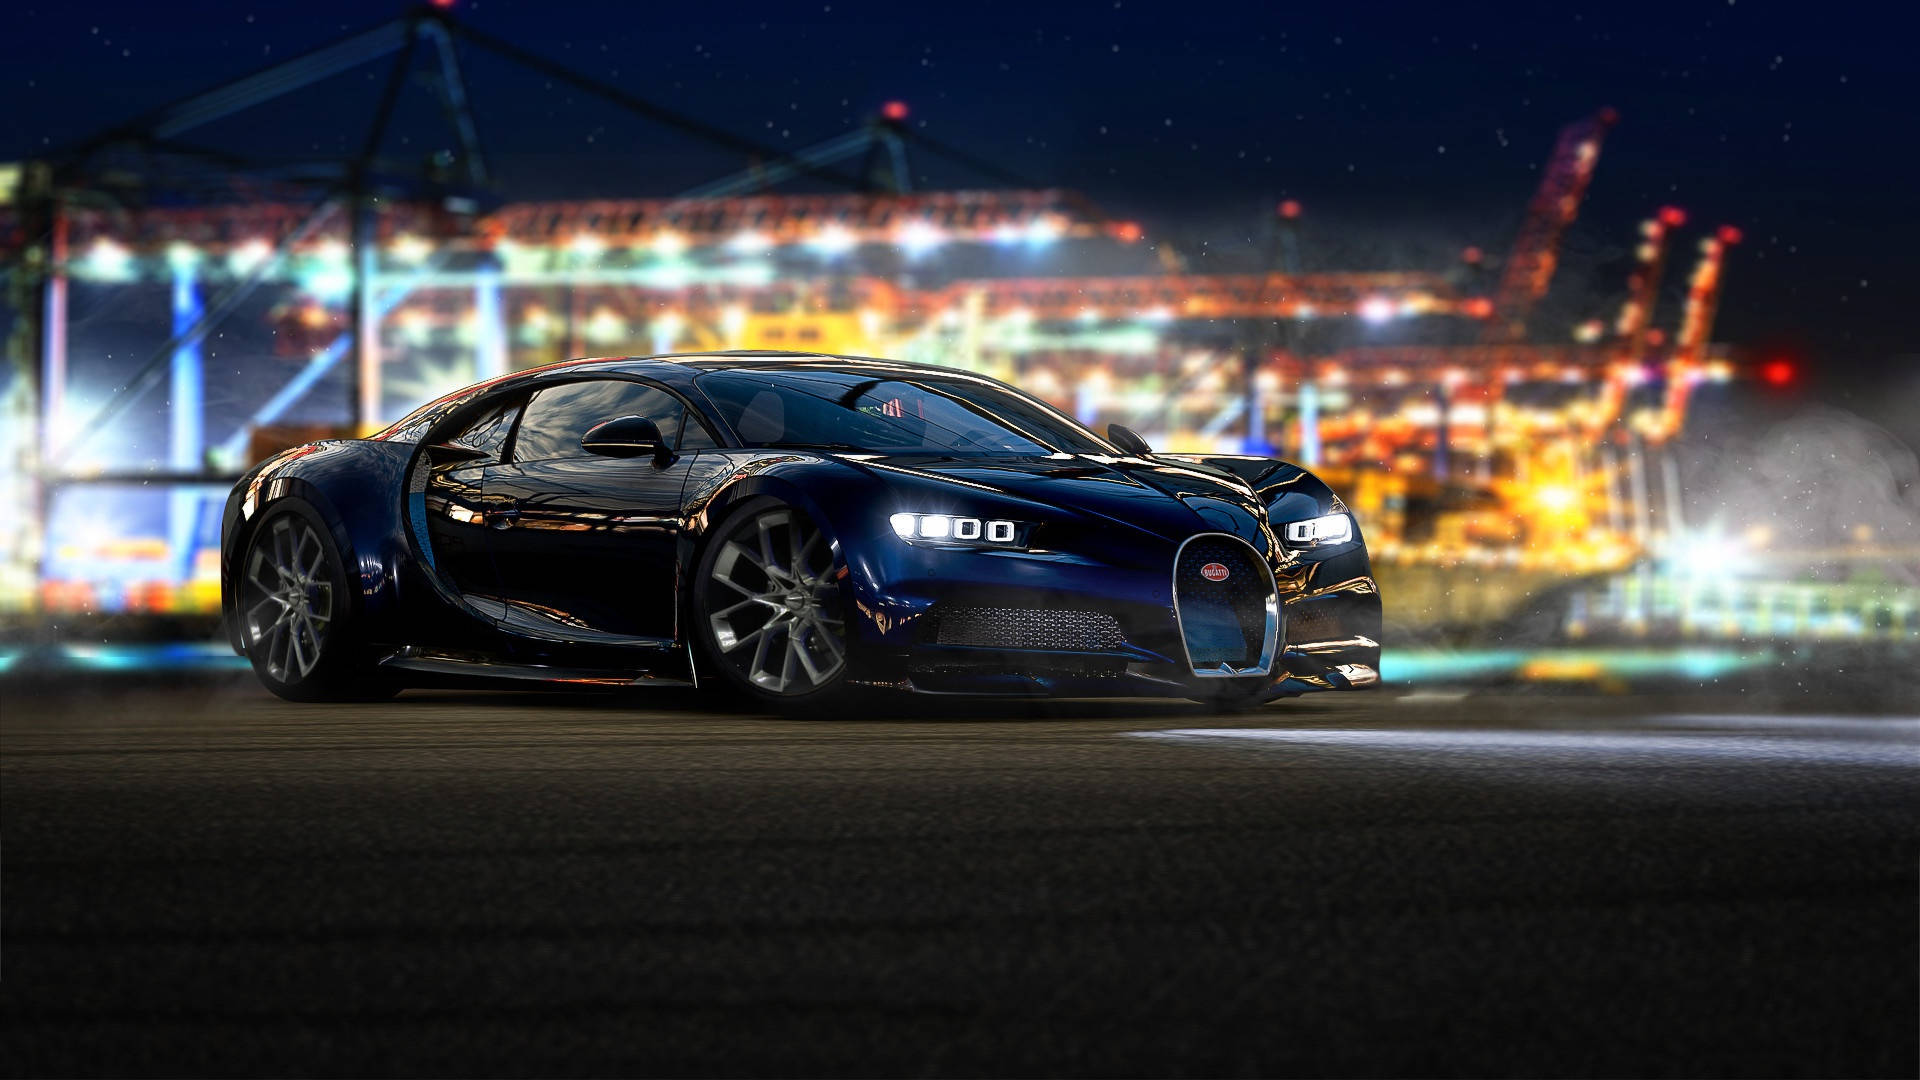 Stunning Black Bugatti Chiron In Forza Motorsport 7 Background